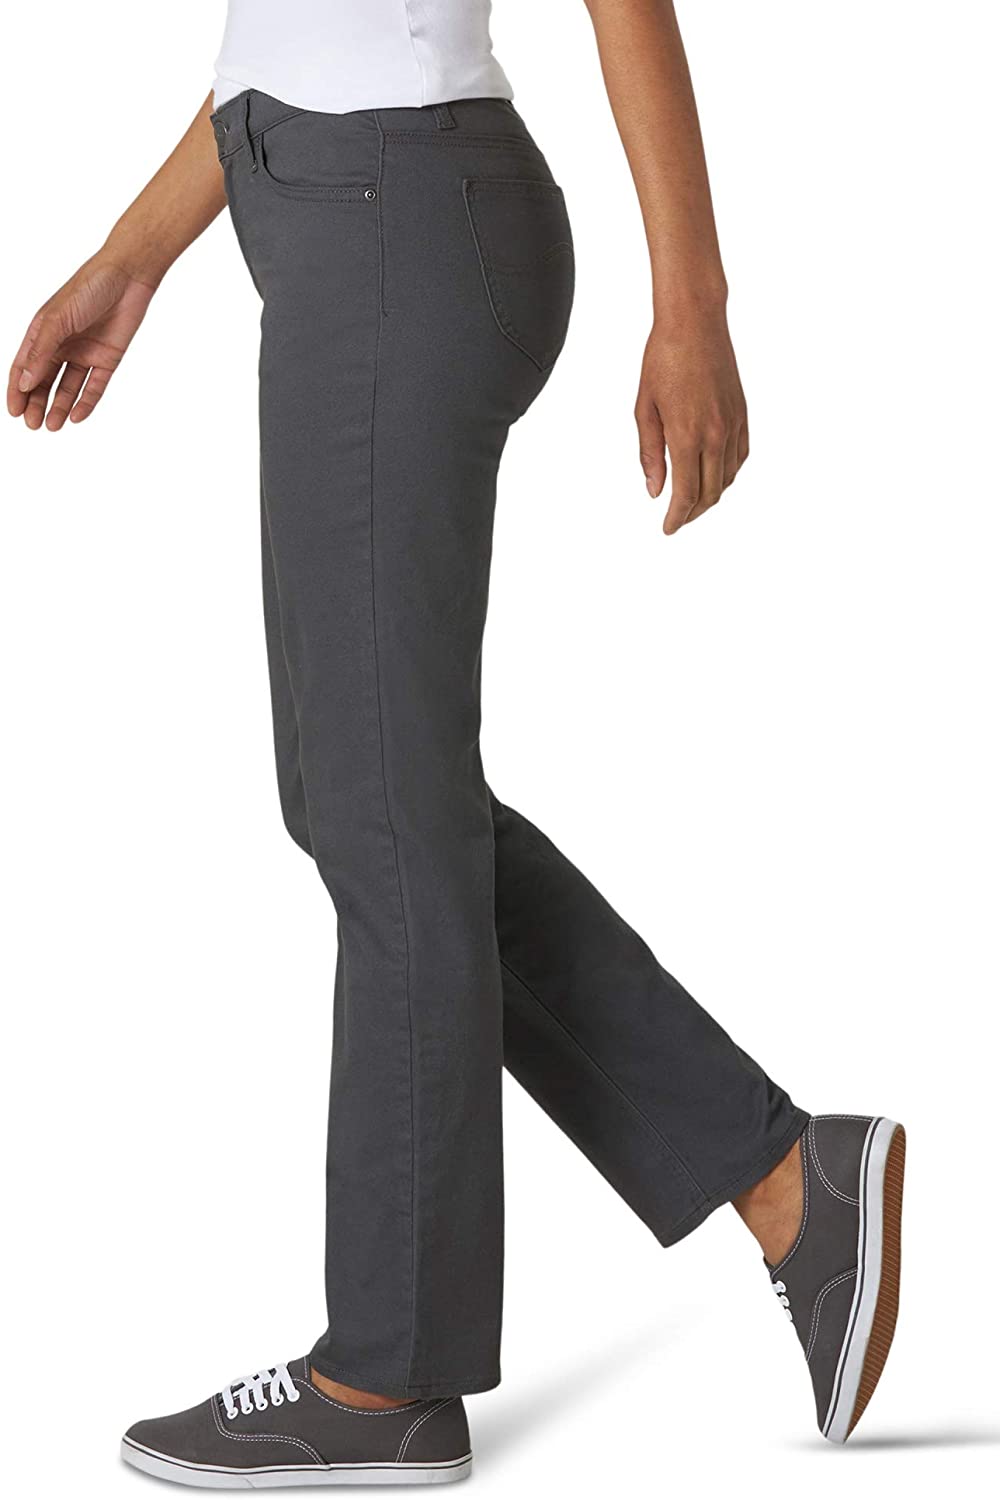 Lee Women's Relaxed Fit Straight-Leg Jean, Charcoal, Size 10.0 Vrb5 | eBay